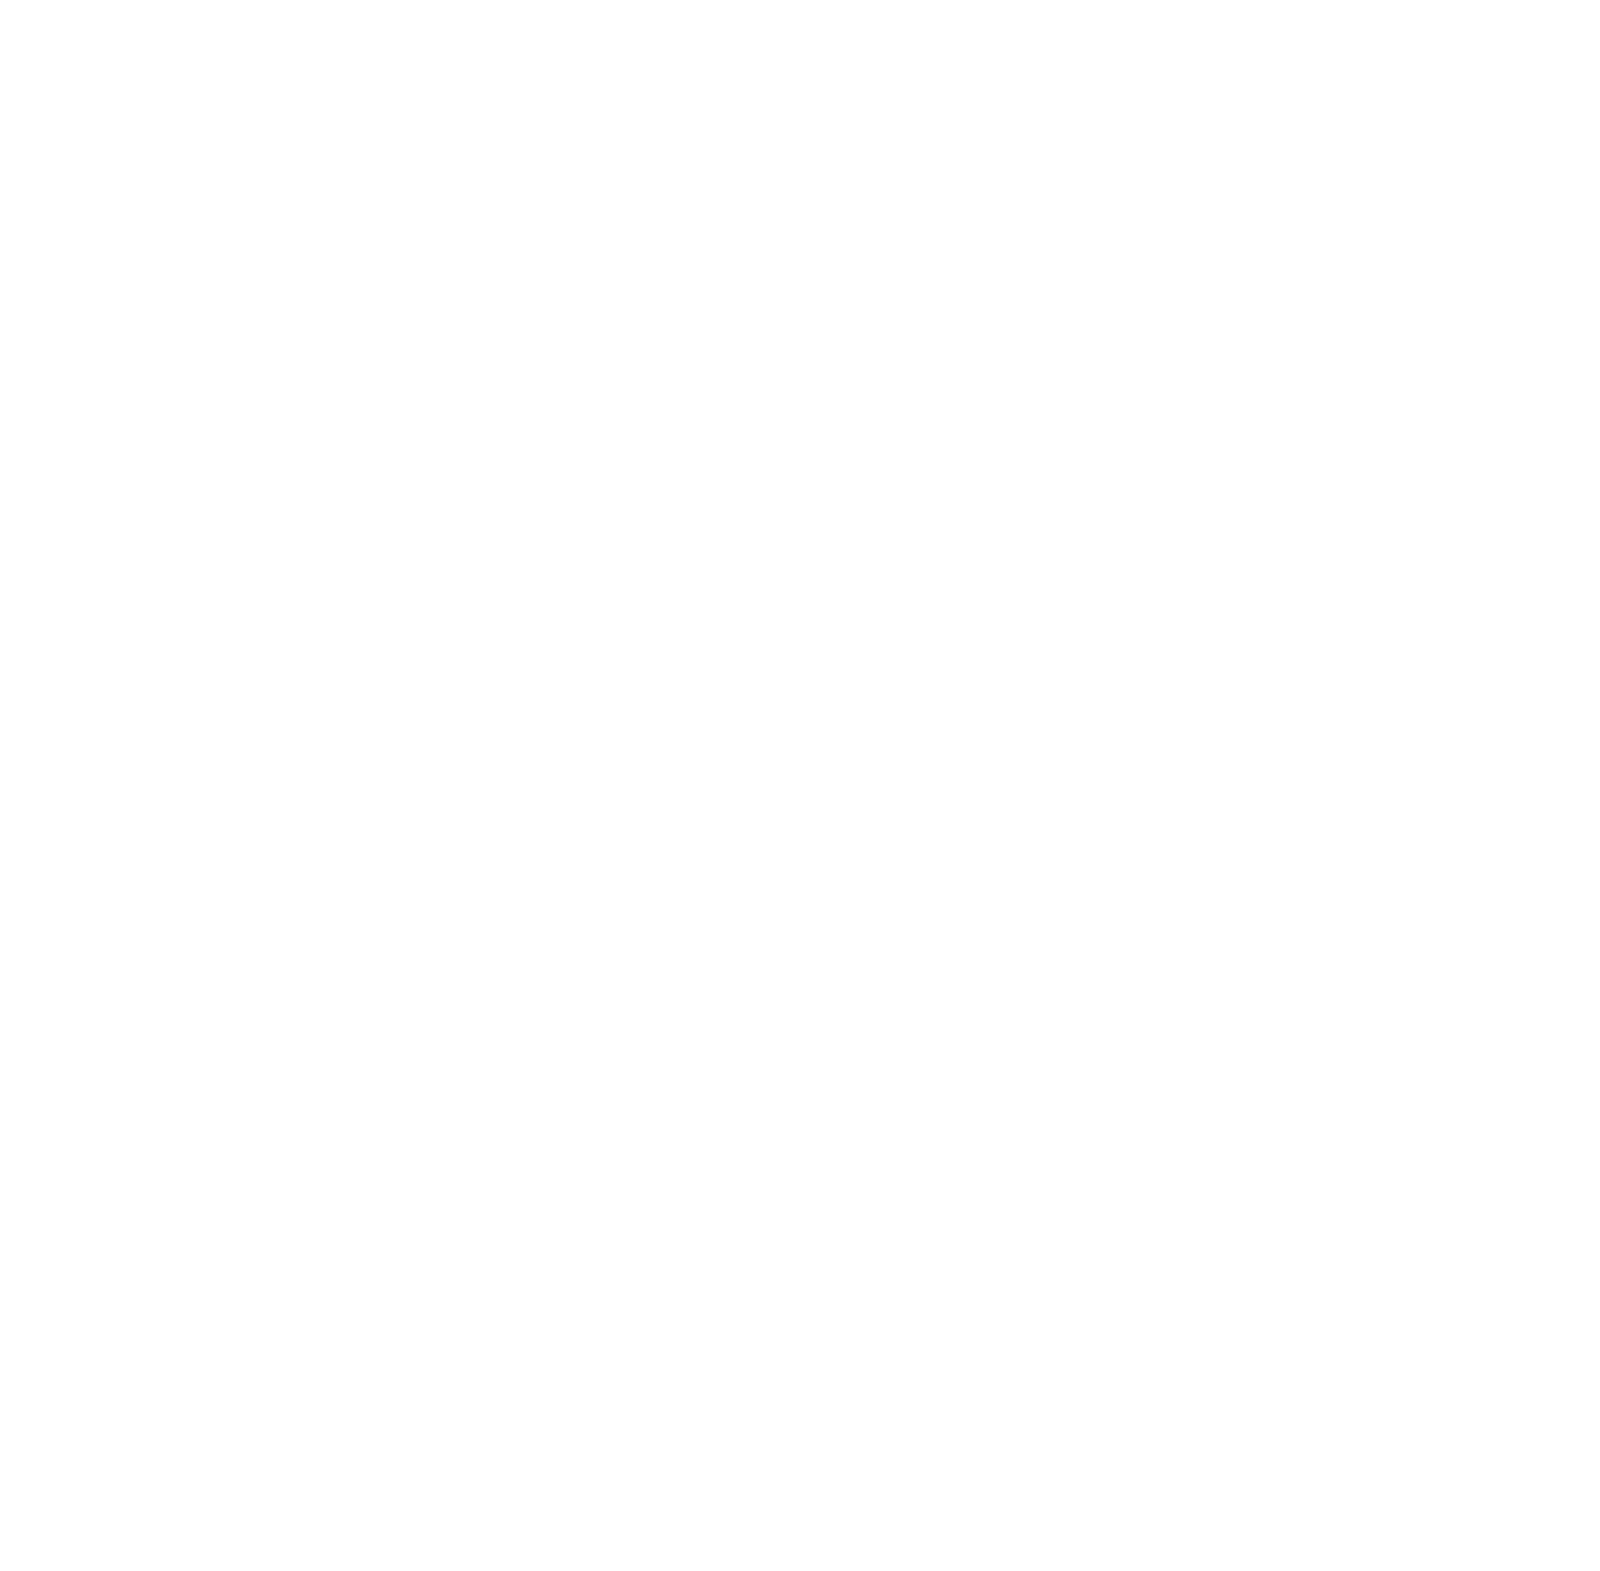 The Biointernet Network